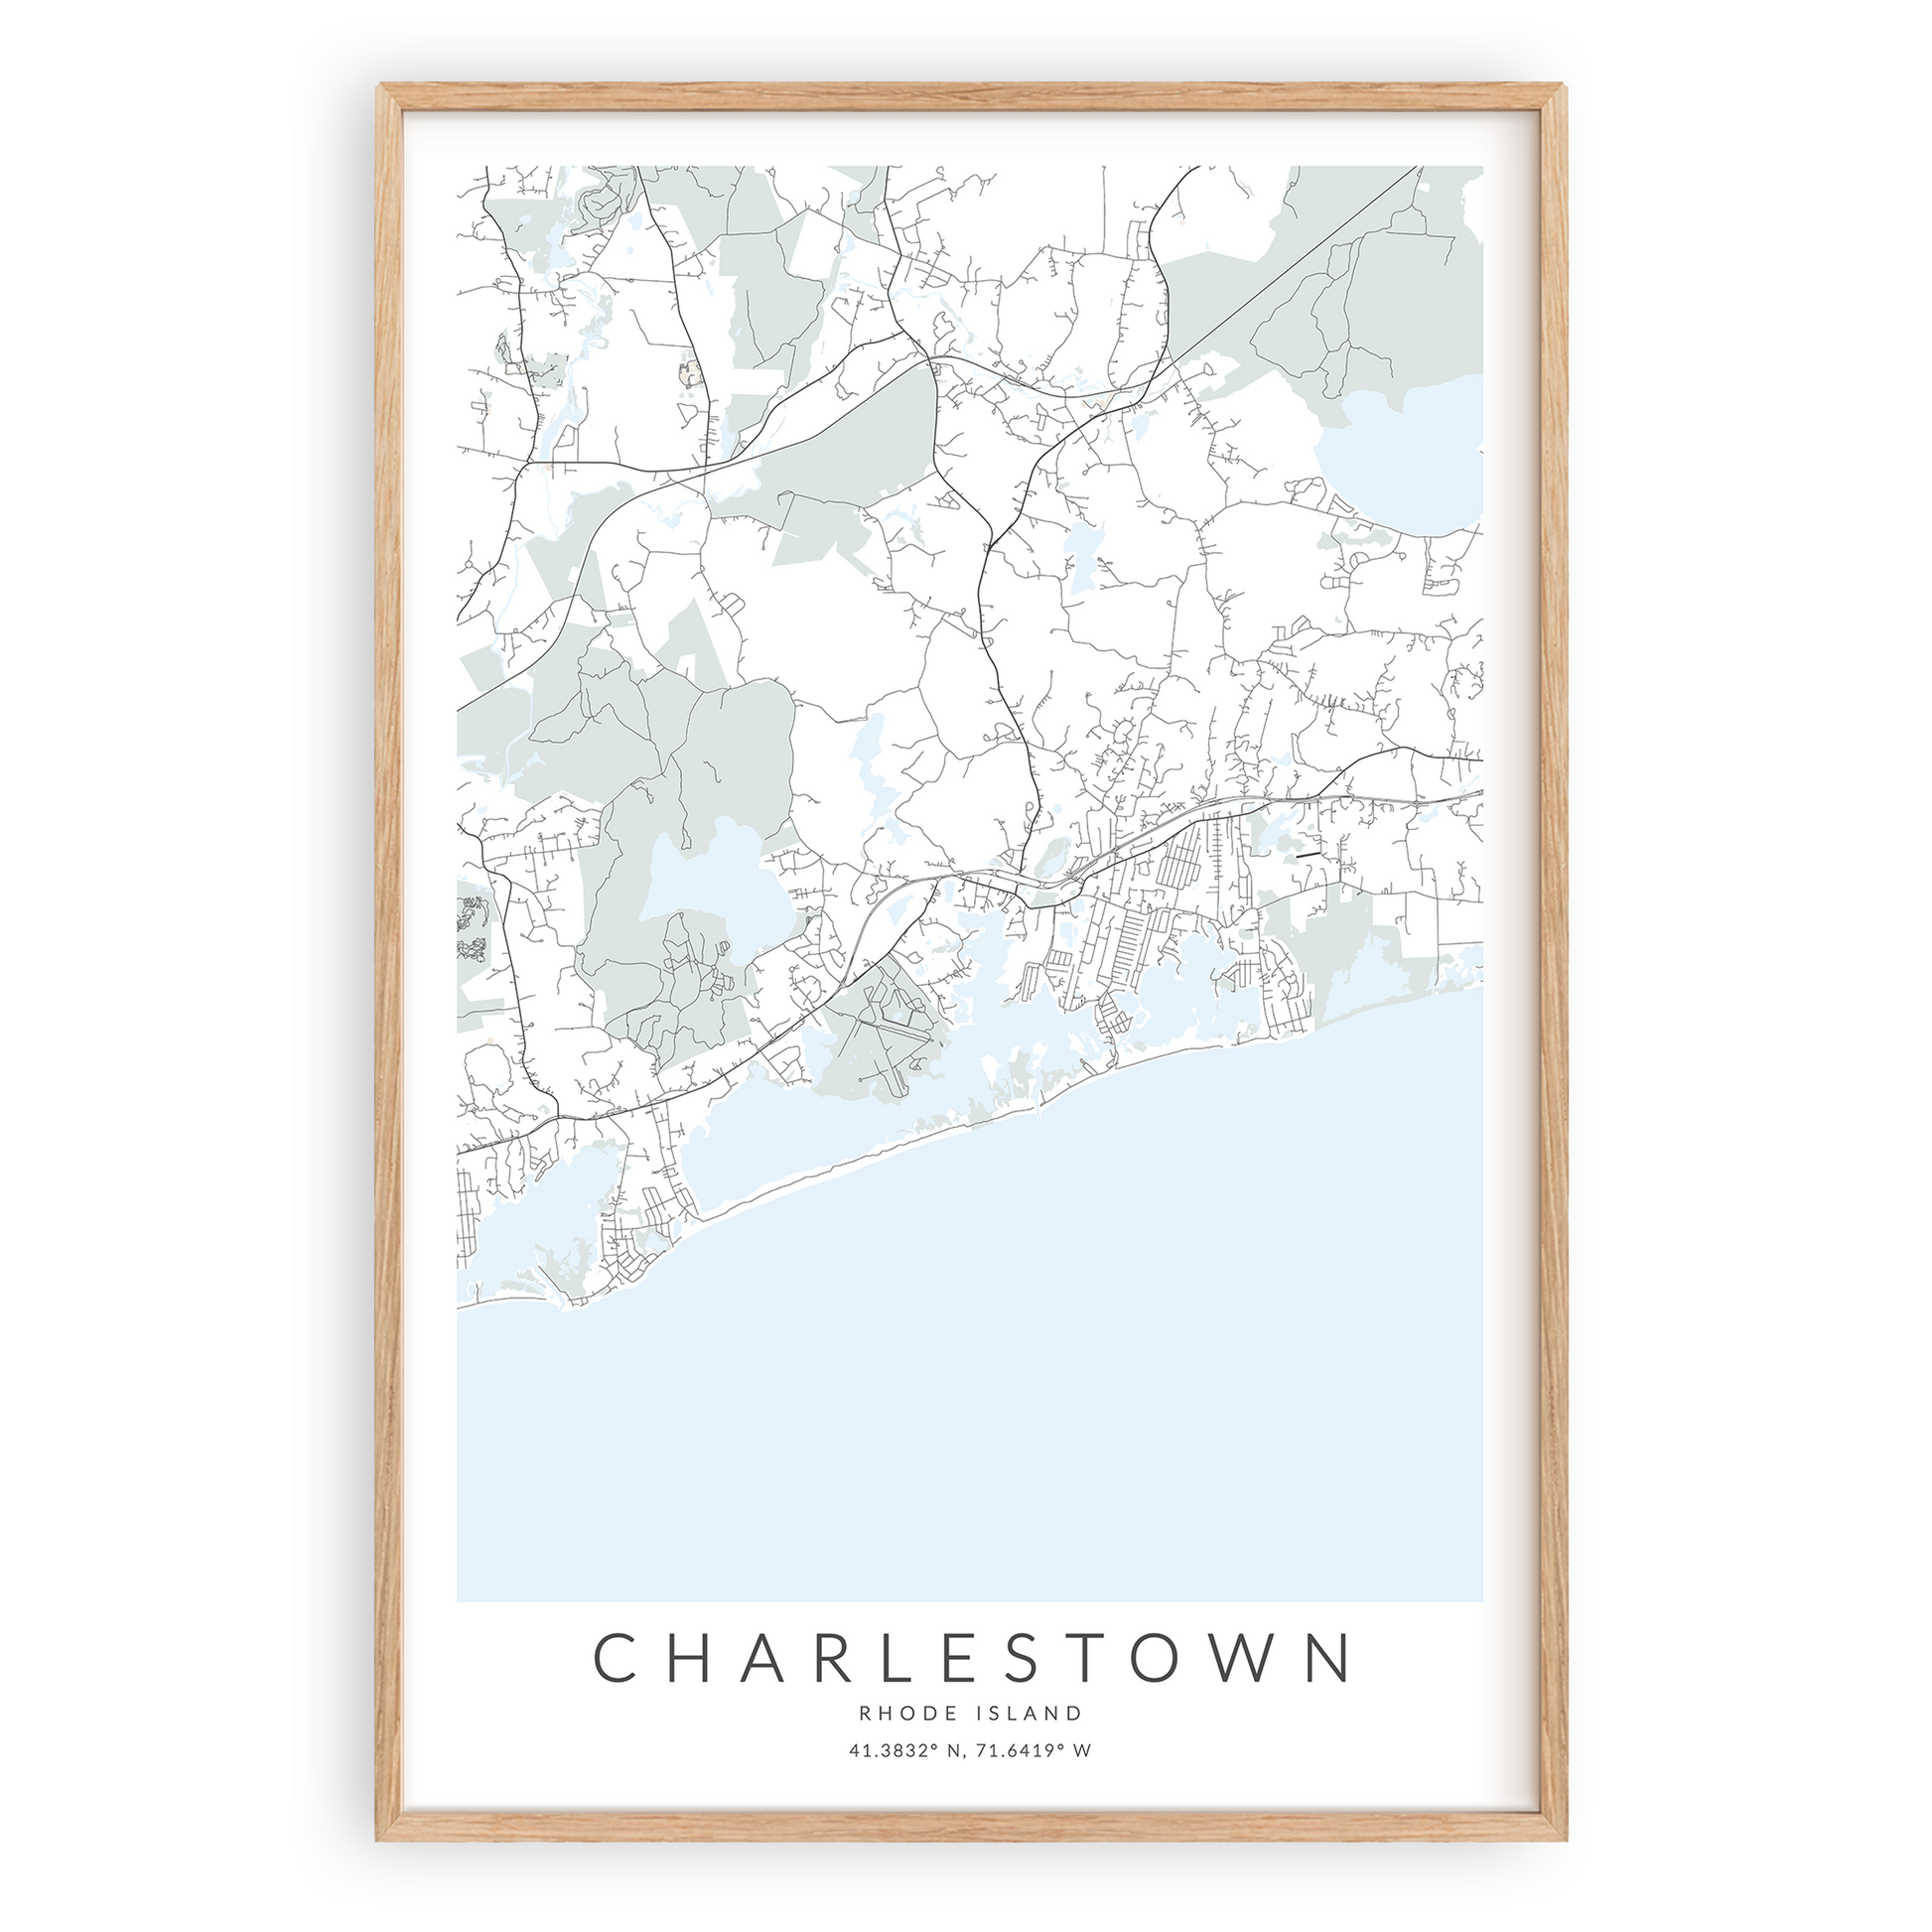 charlestown rhode island map